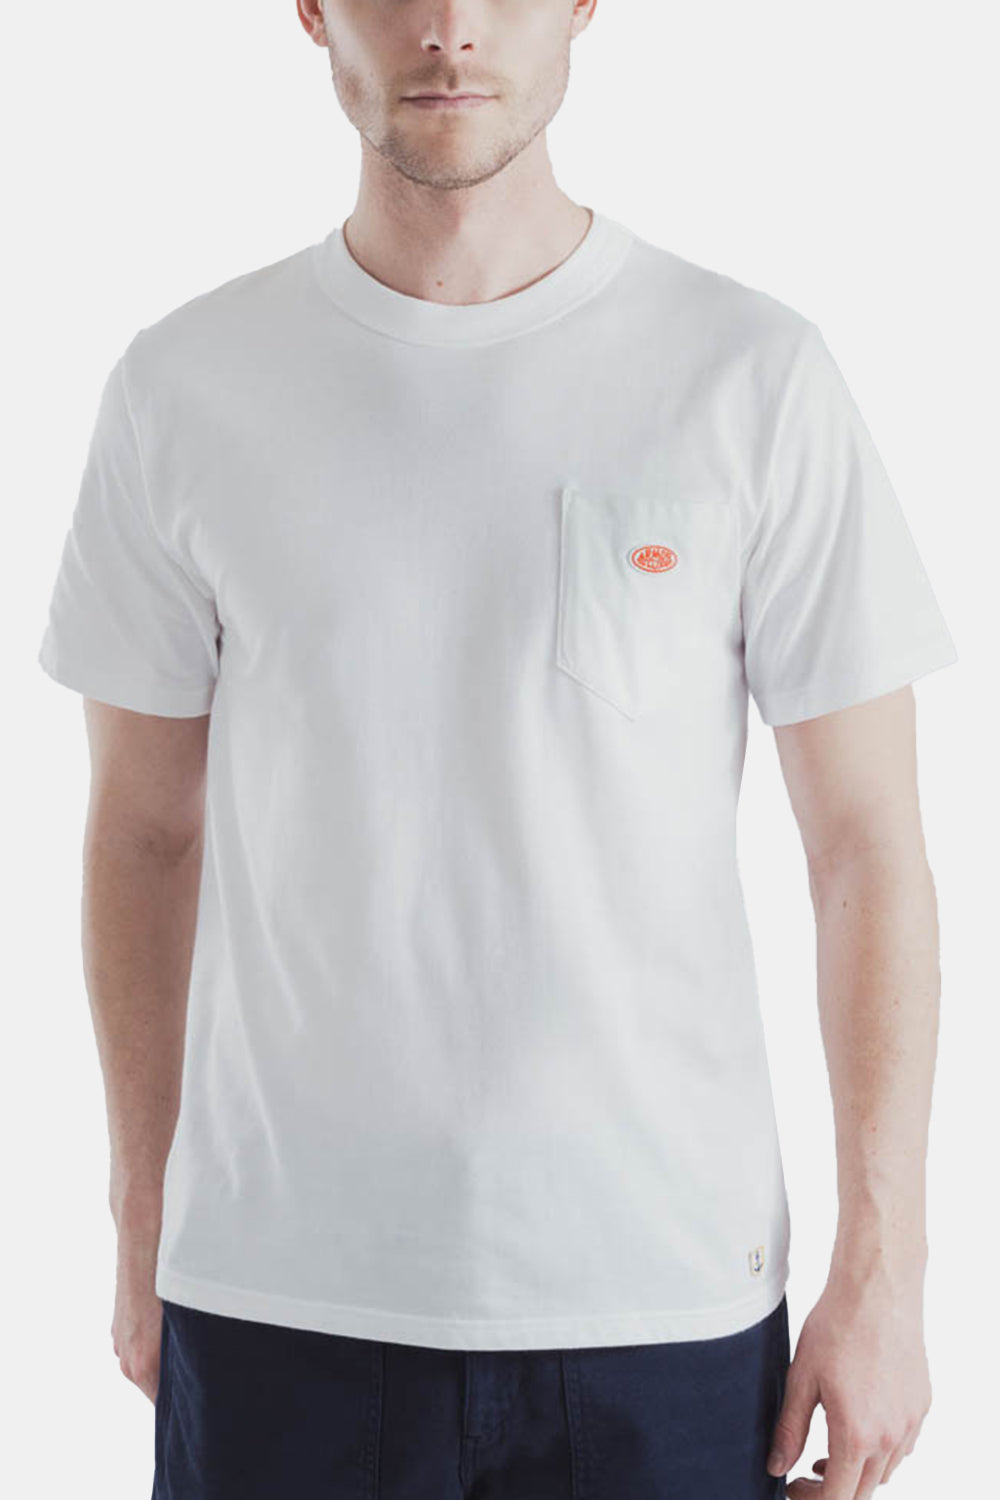 Armor Lux Heritage Classic Organic Pocket T-Shirt (White)